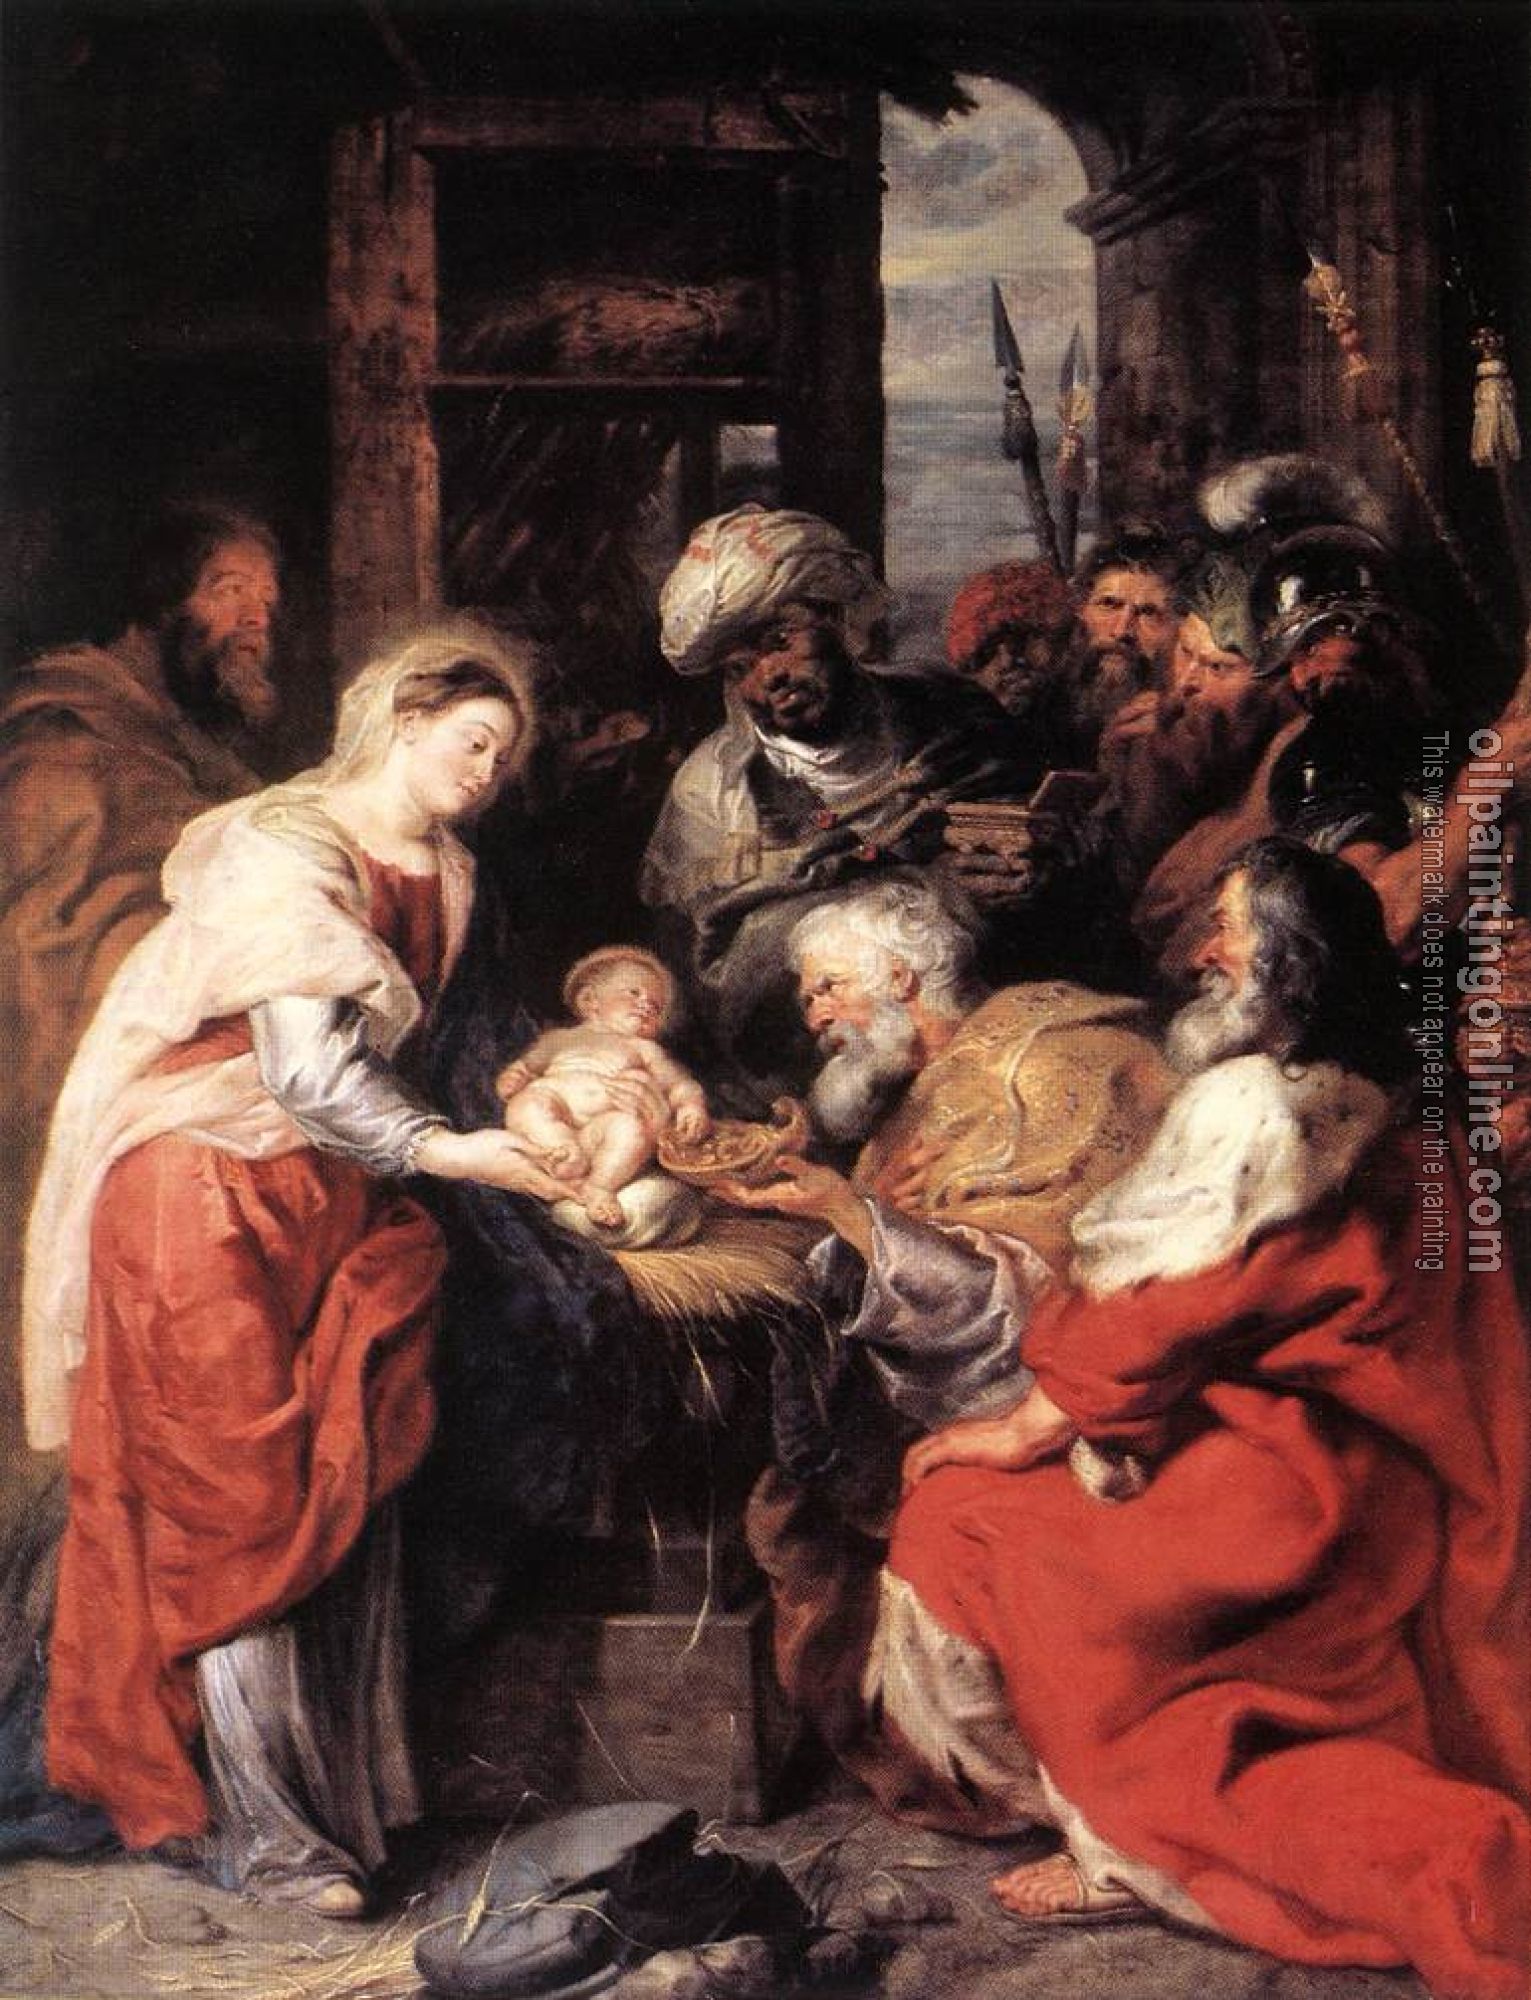 Rubens, Peter Paul - Adoration of the Magi